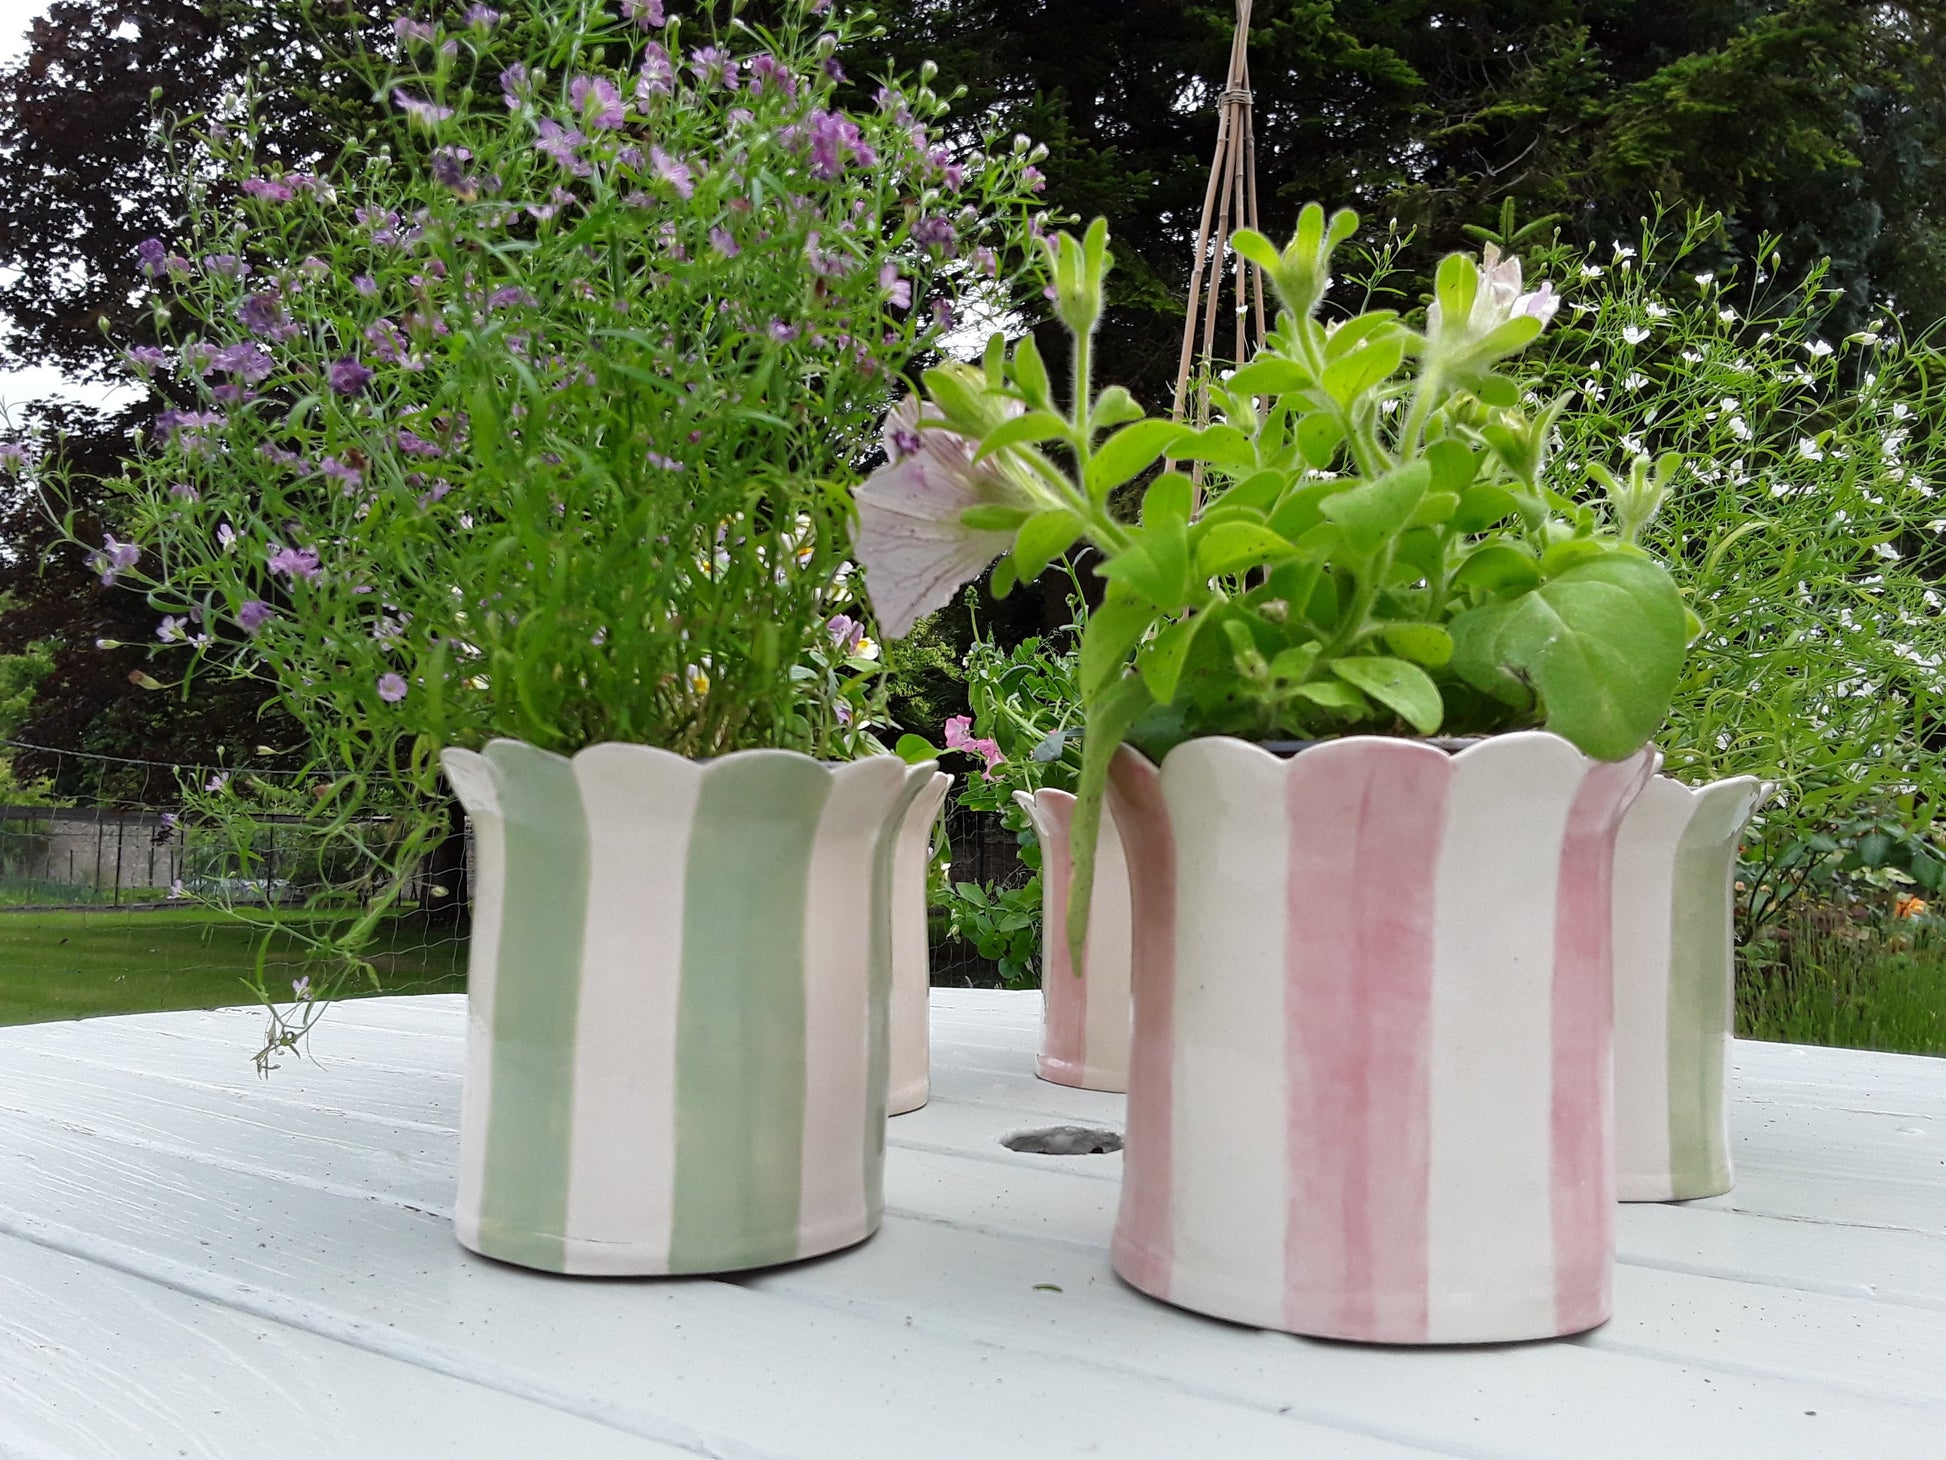 Sea Bramble Ceramics - Homemade Daisy Planters shown in pink & sage. Ceramic Stoneware planter / vase with beautiful flower arrangements